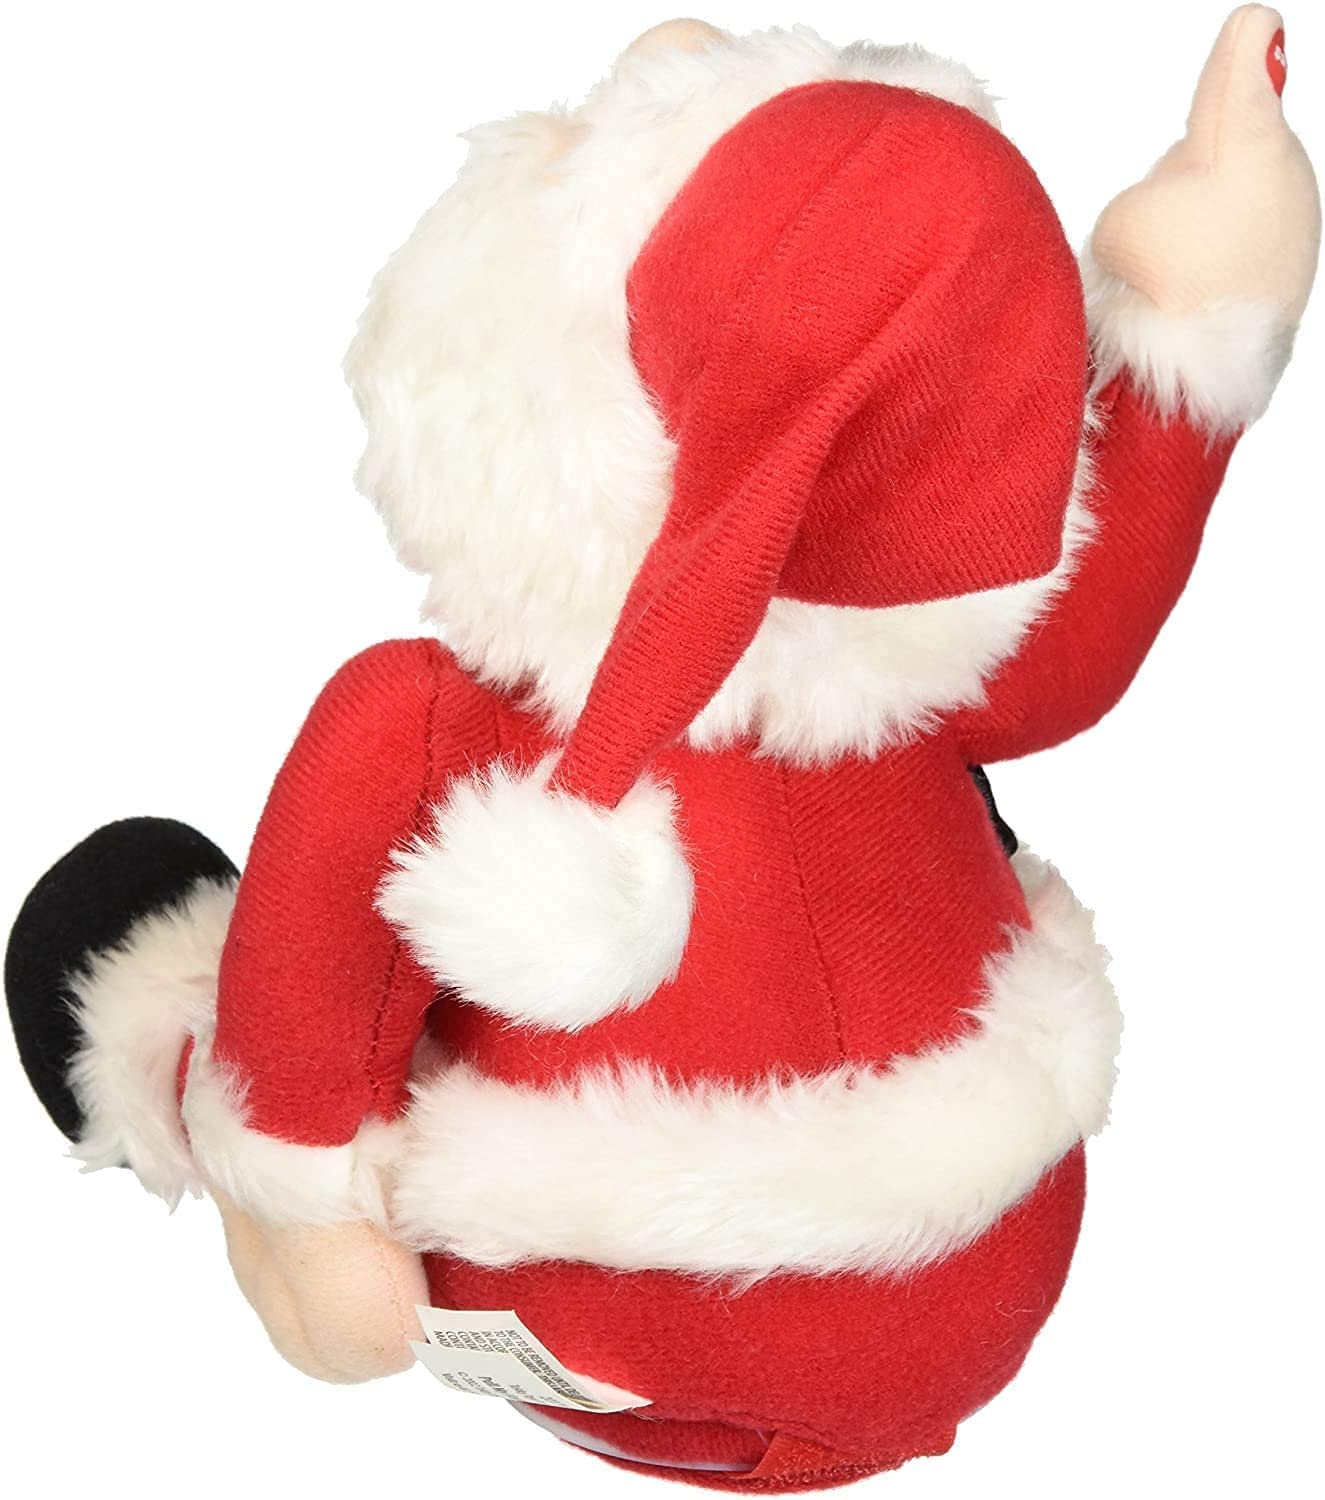 4E's Novelty Farting Santa Claus 'Pull My Finger Farting Santa' Christmas Gag Gift for Adults, White Elephant Gift